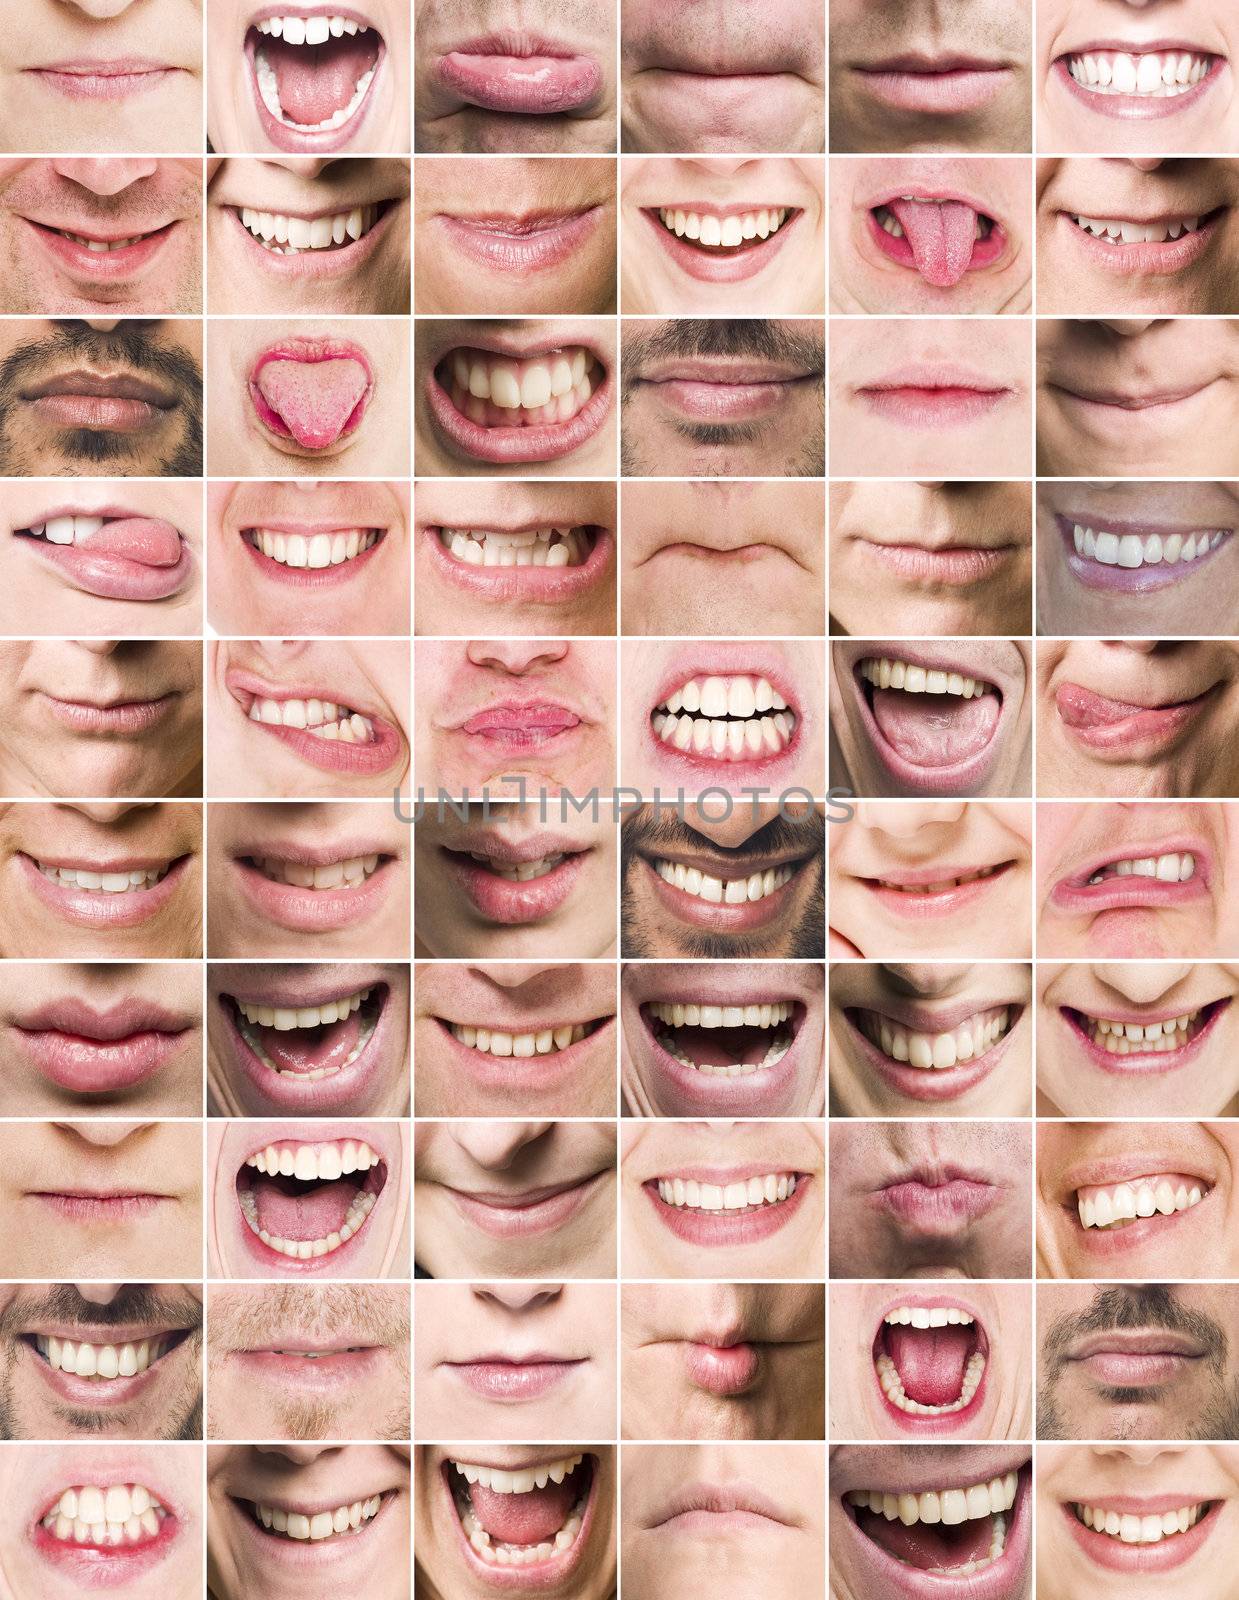 Mouths by gemenacom